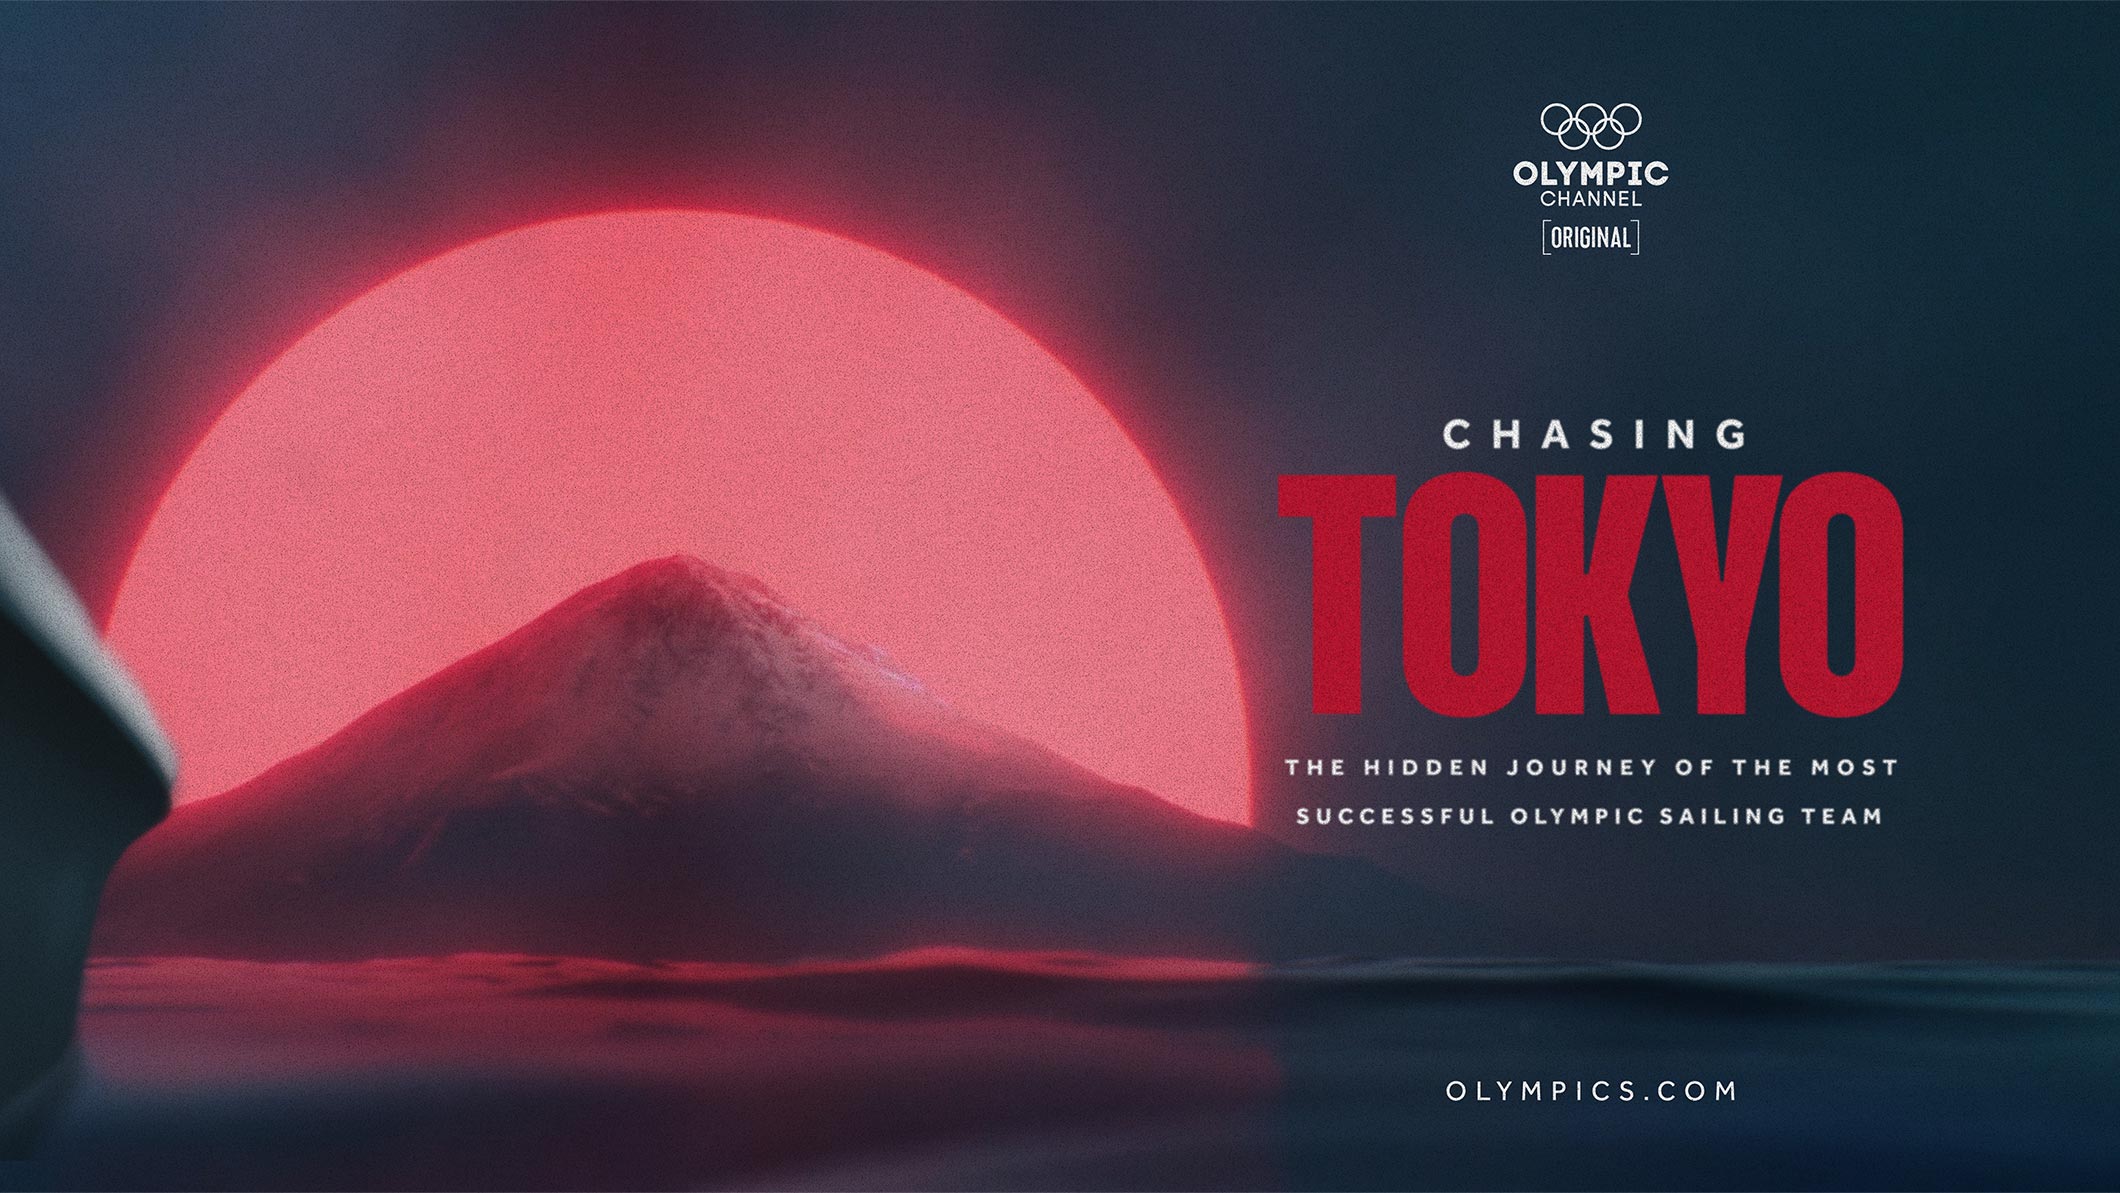 Chasing Tokyo documentary on Olympics.com follows Crew GB’s epic Tokyo 2020 crusing journey